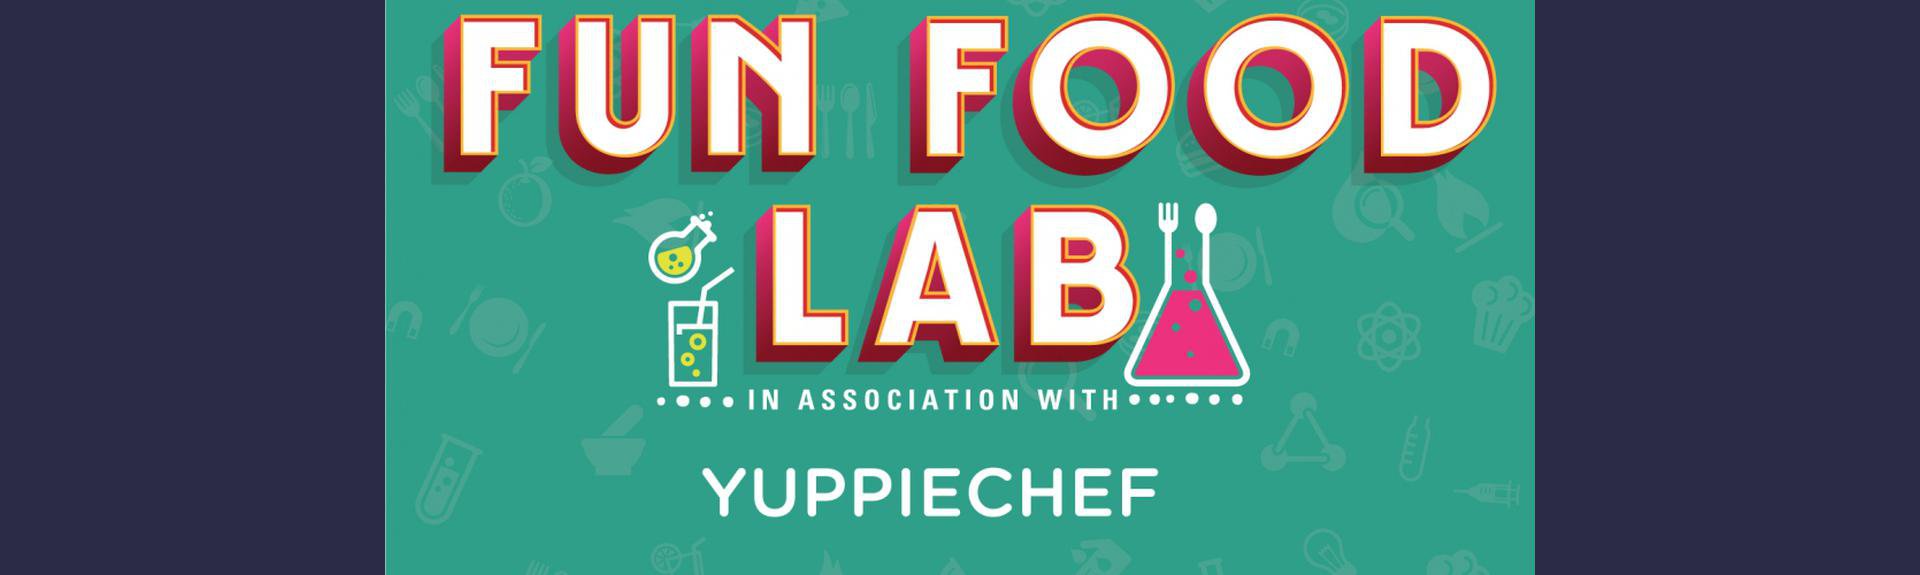 Fun Food Lab - Holiday Programme